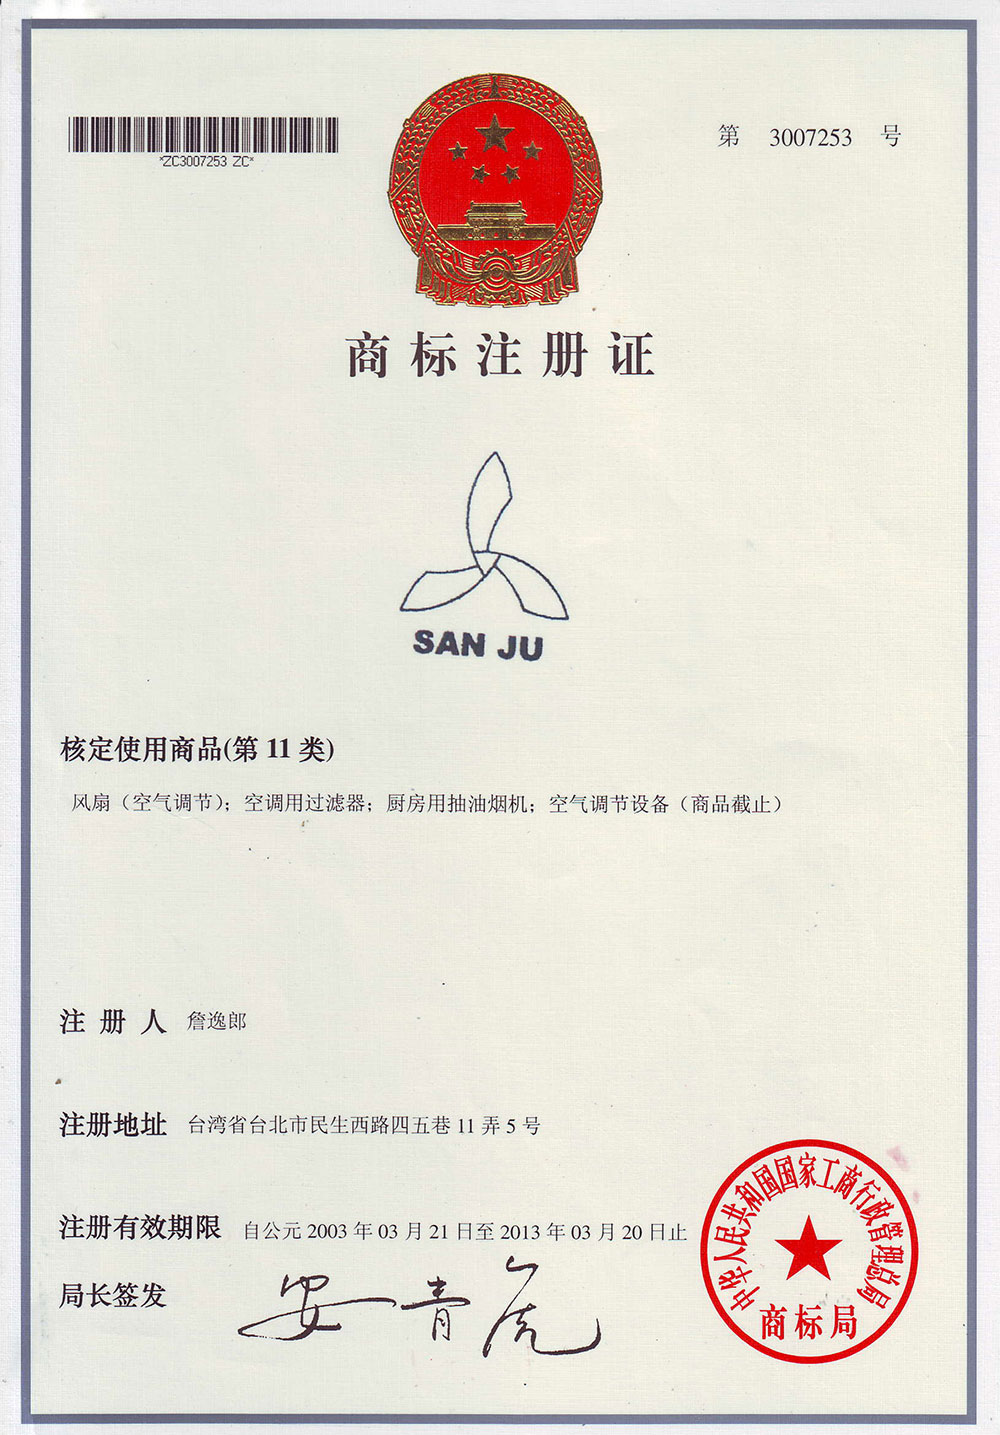 San Ju trademark registration certificate